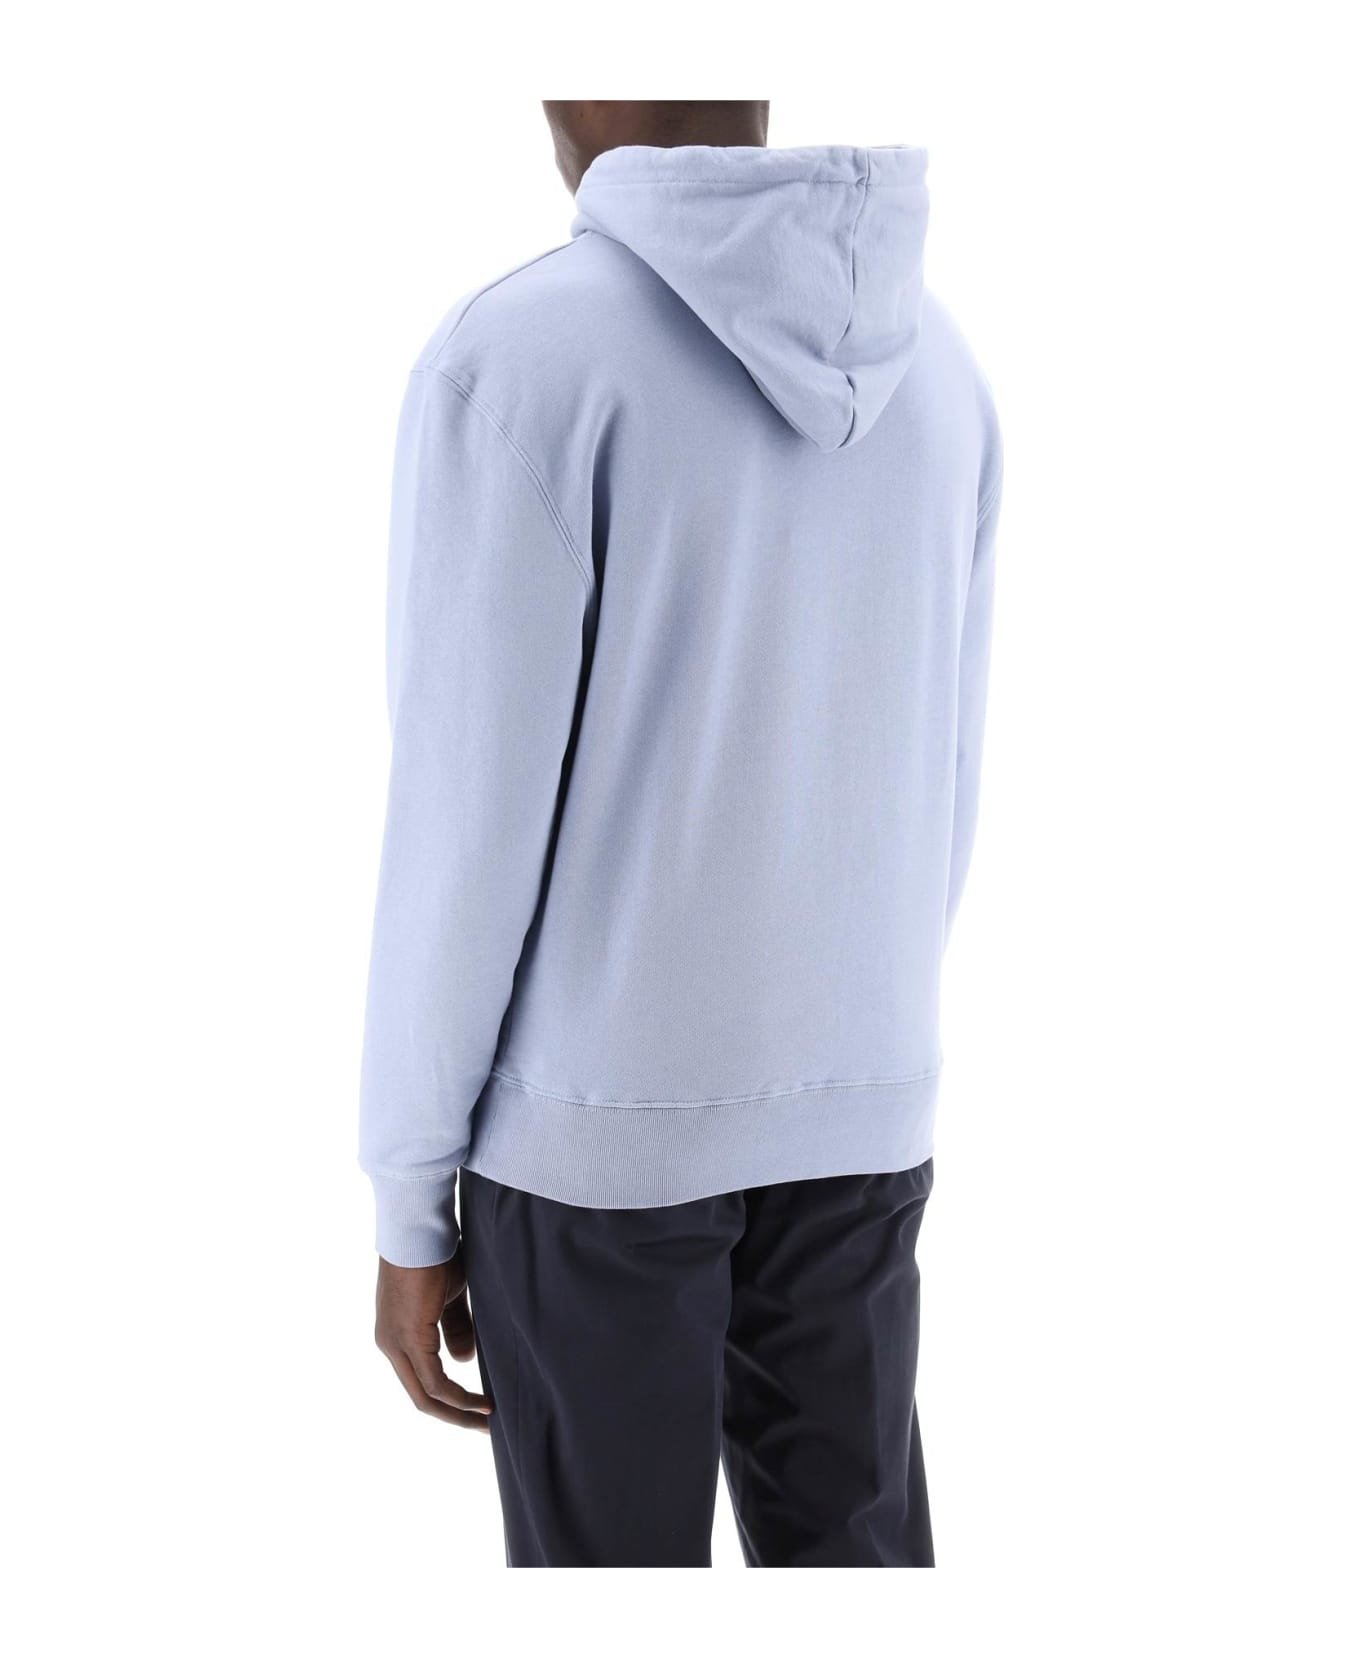 Maison Kitsuné Chillax Fox Hooded Sweatshirt - BEAT BLUE (Light blue)